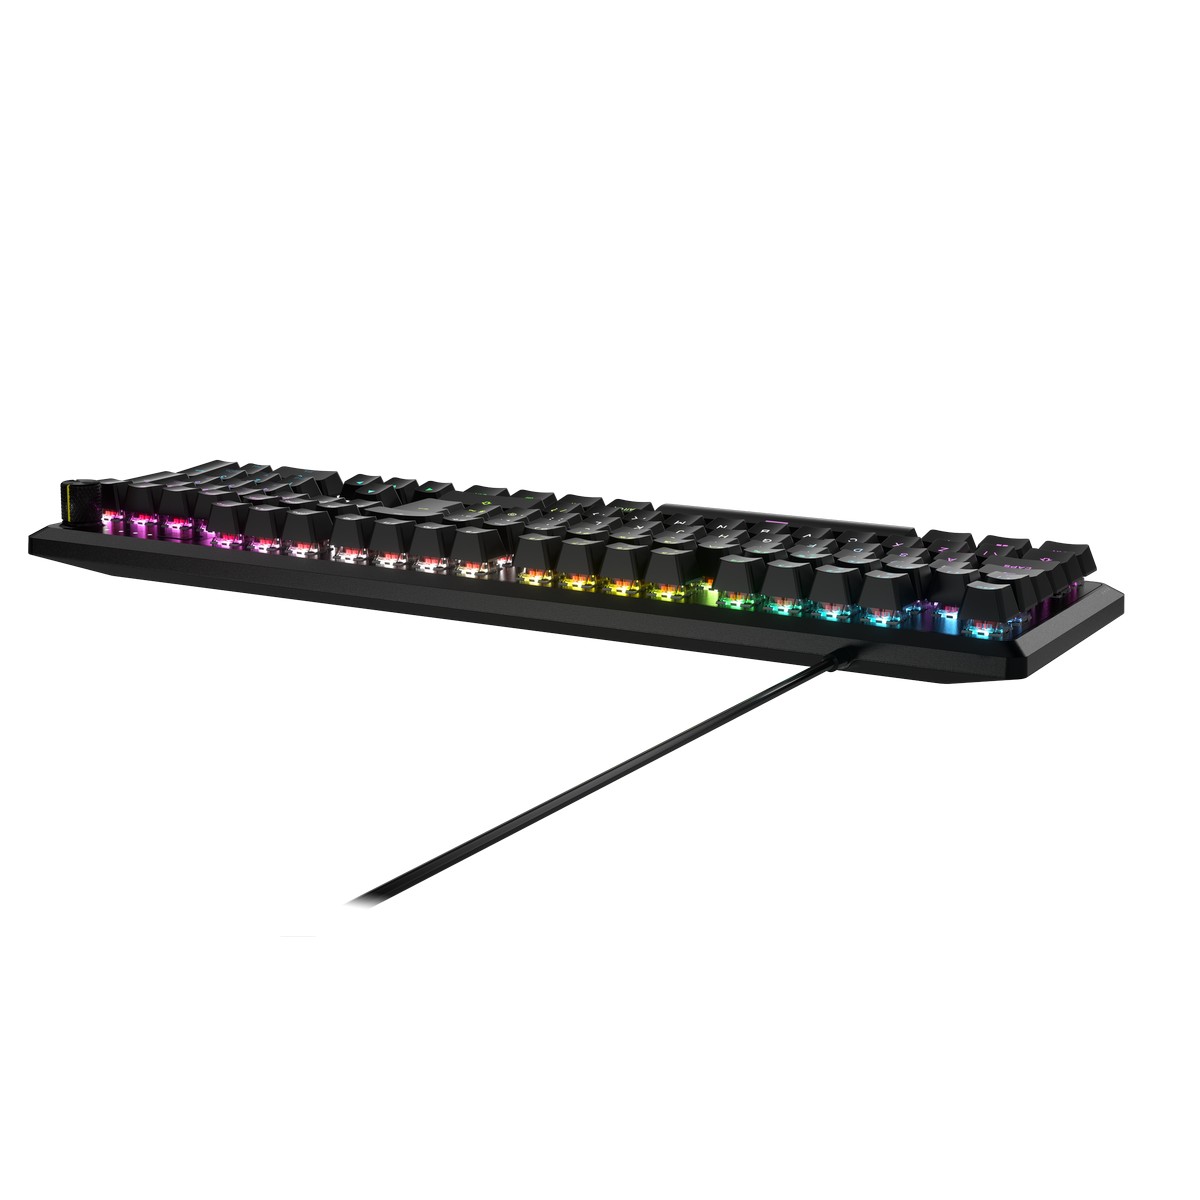 CORSAIR - CORSAIR K70 CORE RGB Mechanical Gaming Keyboard - Red Switch